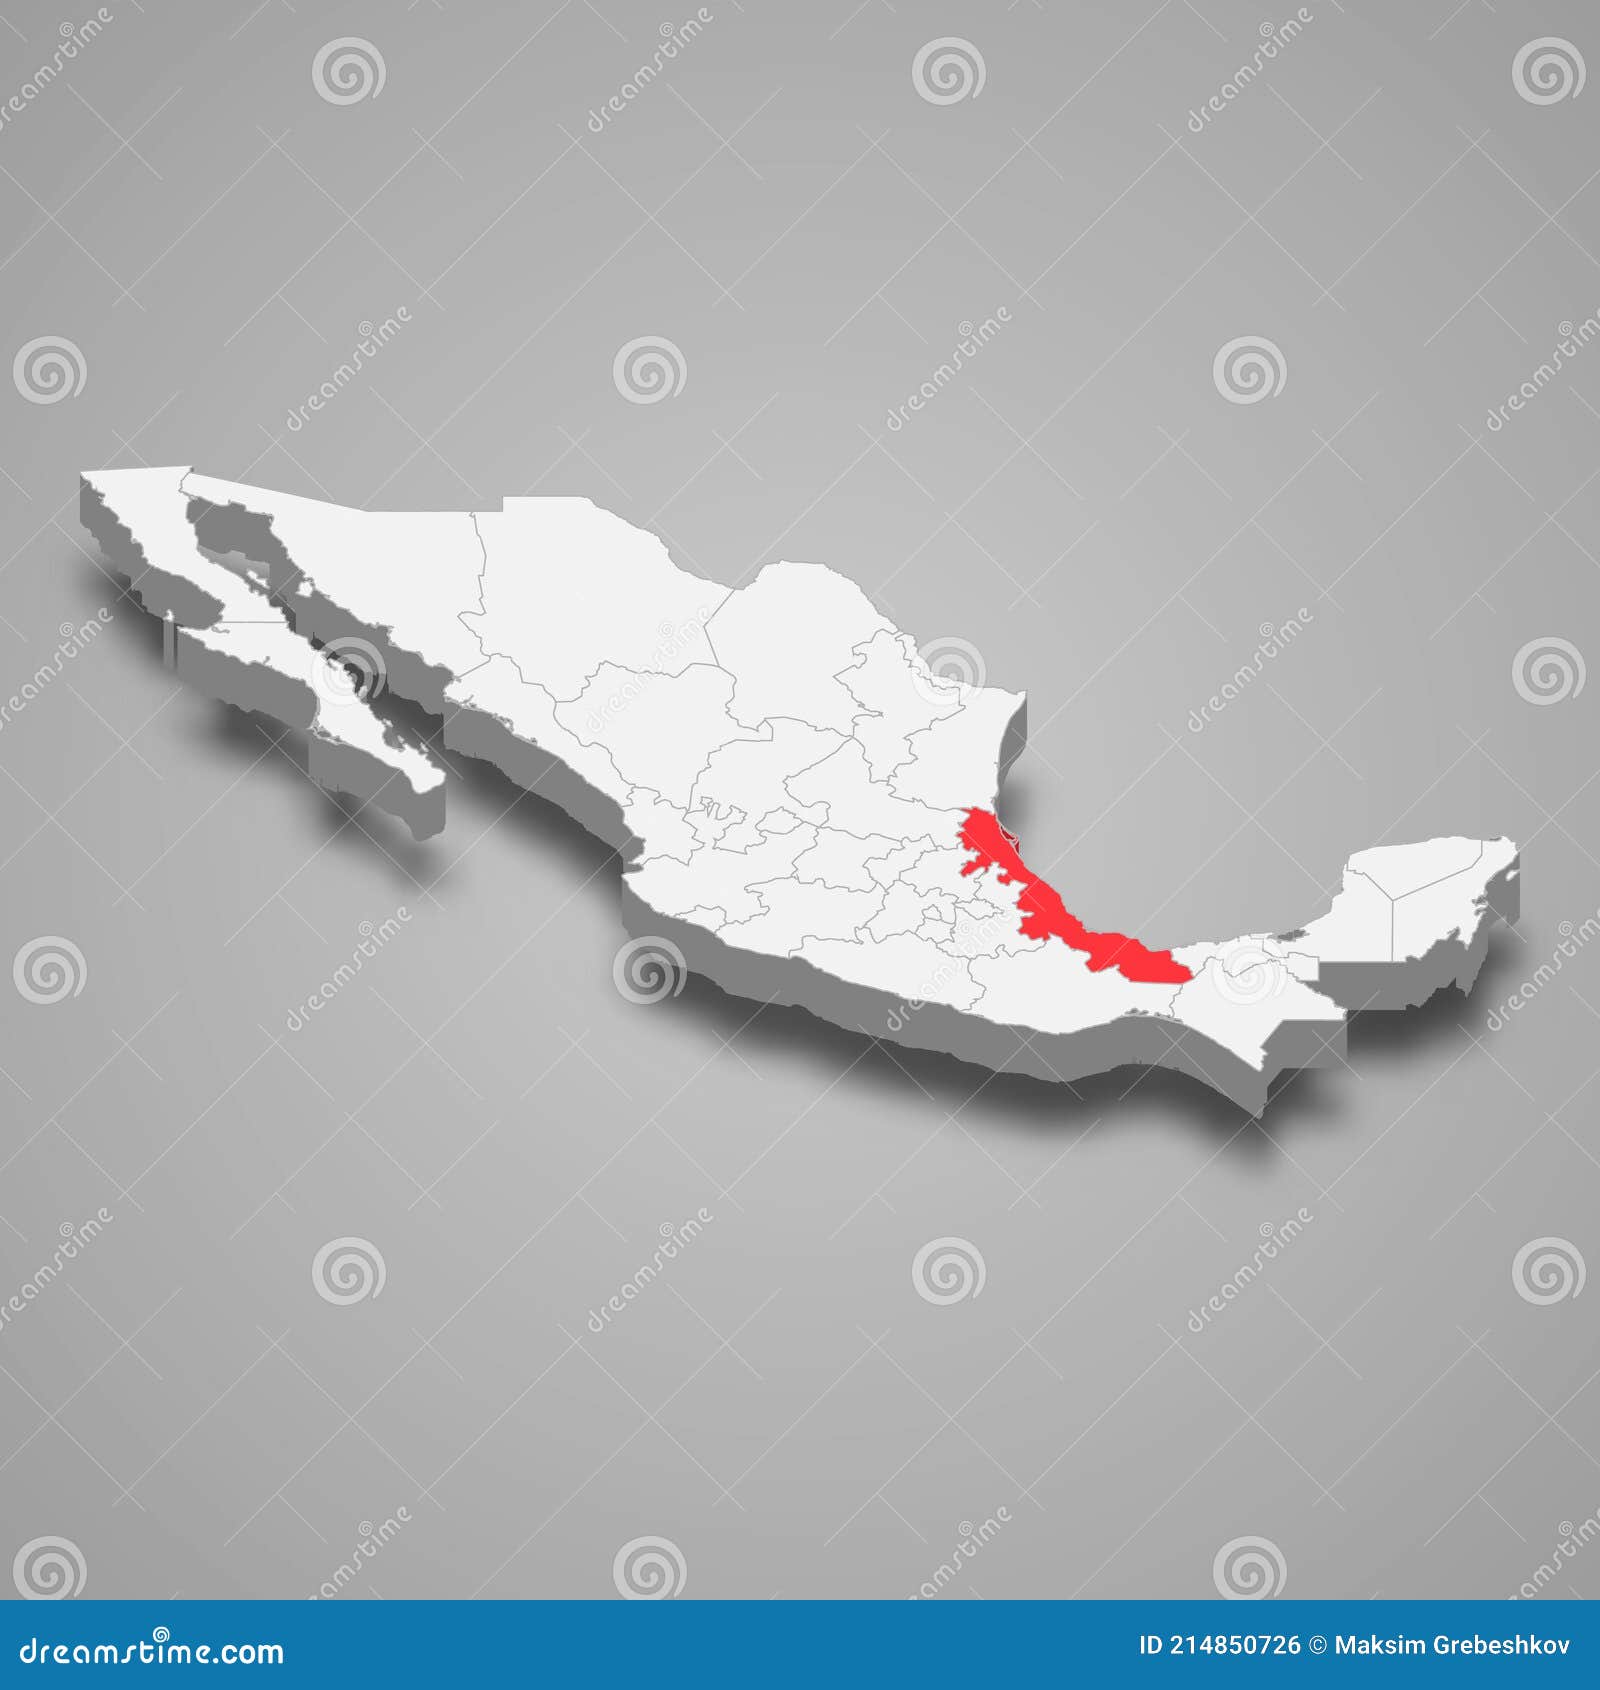 veracruz region location within mexico 3d map